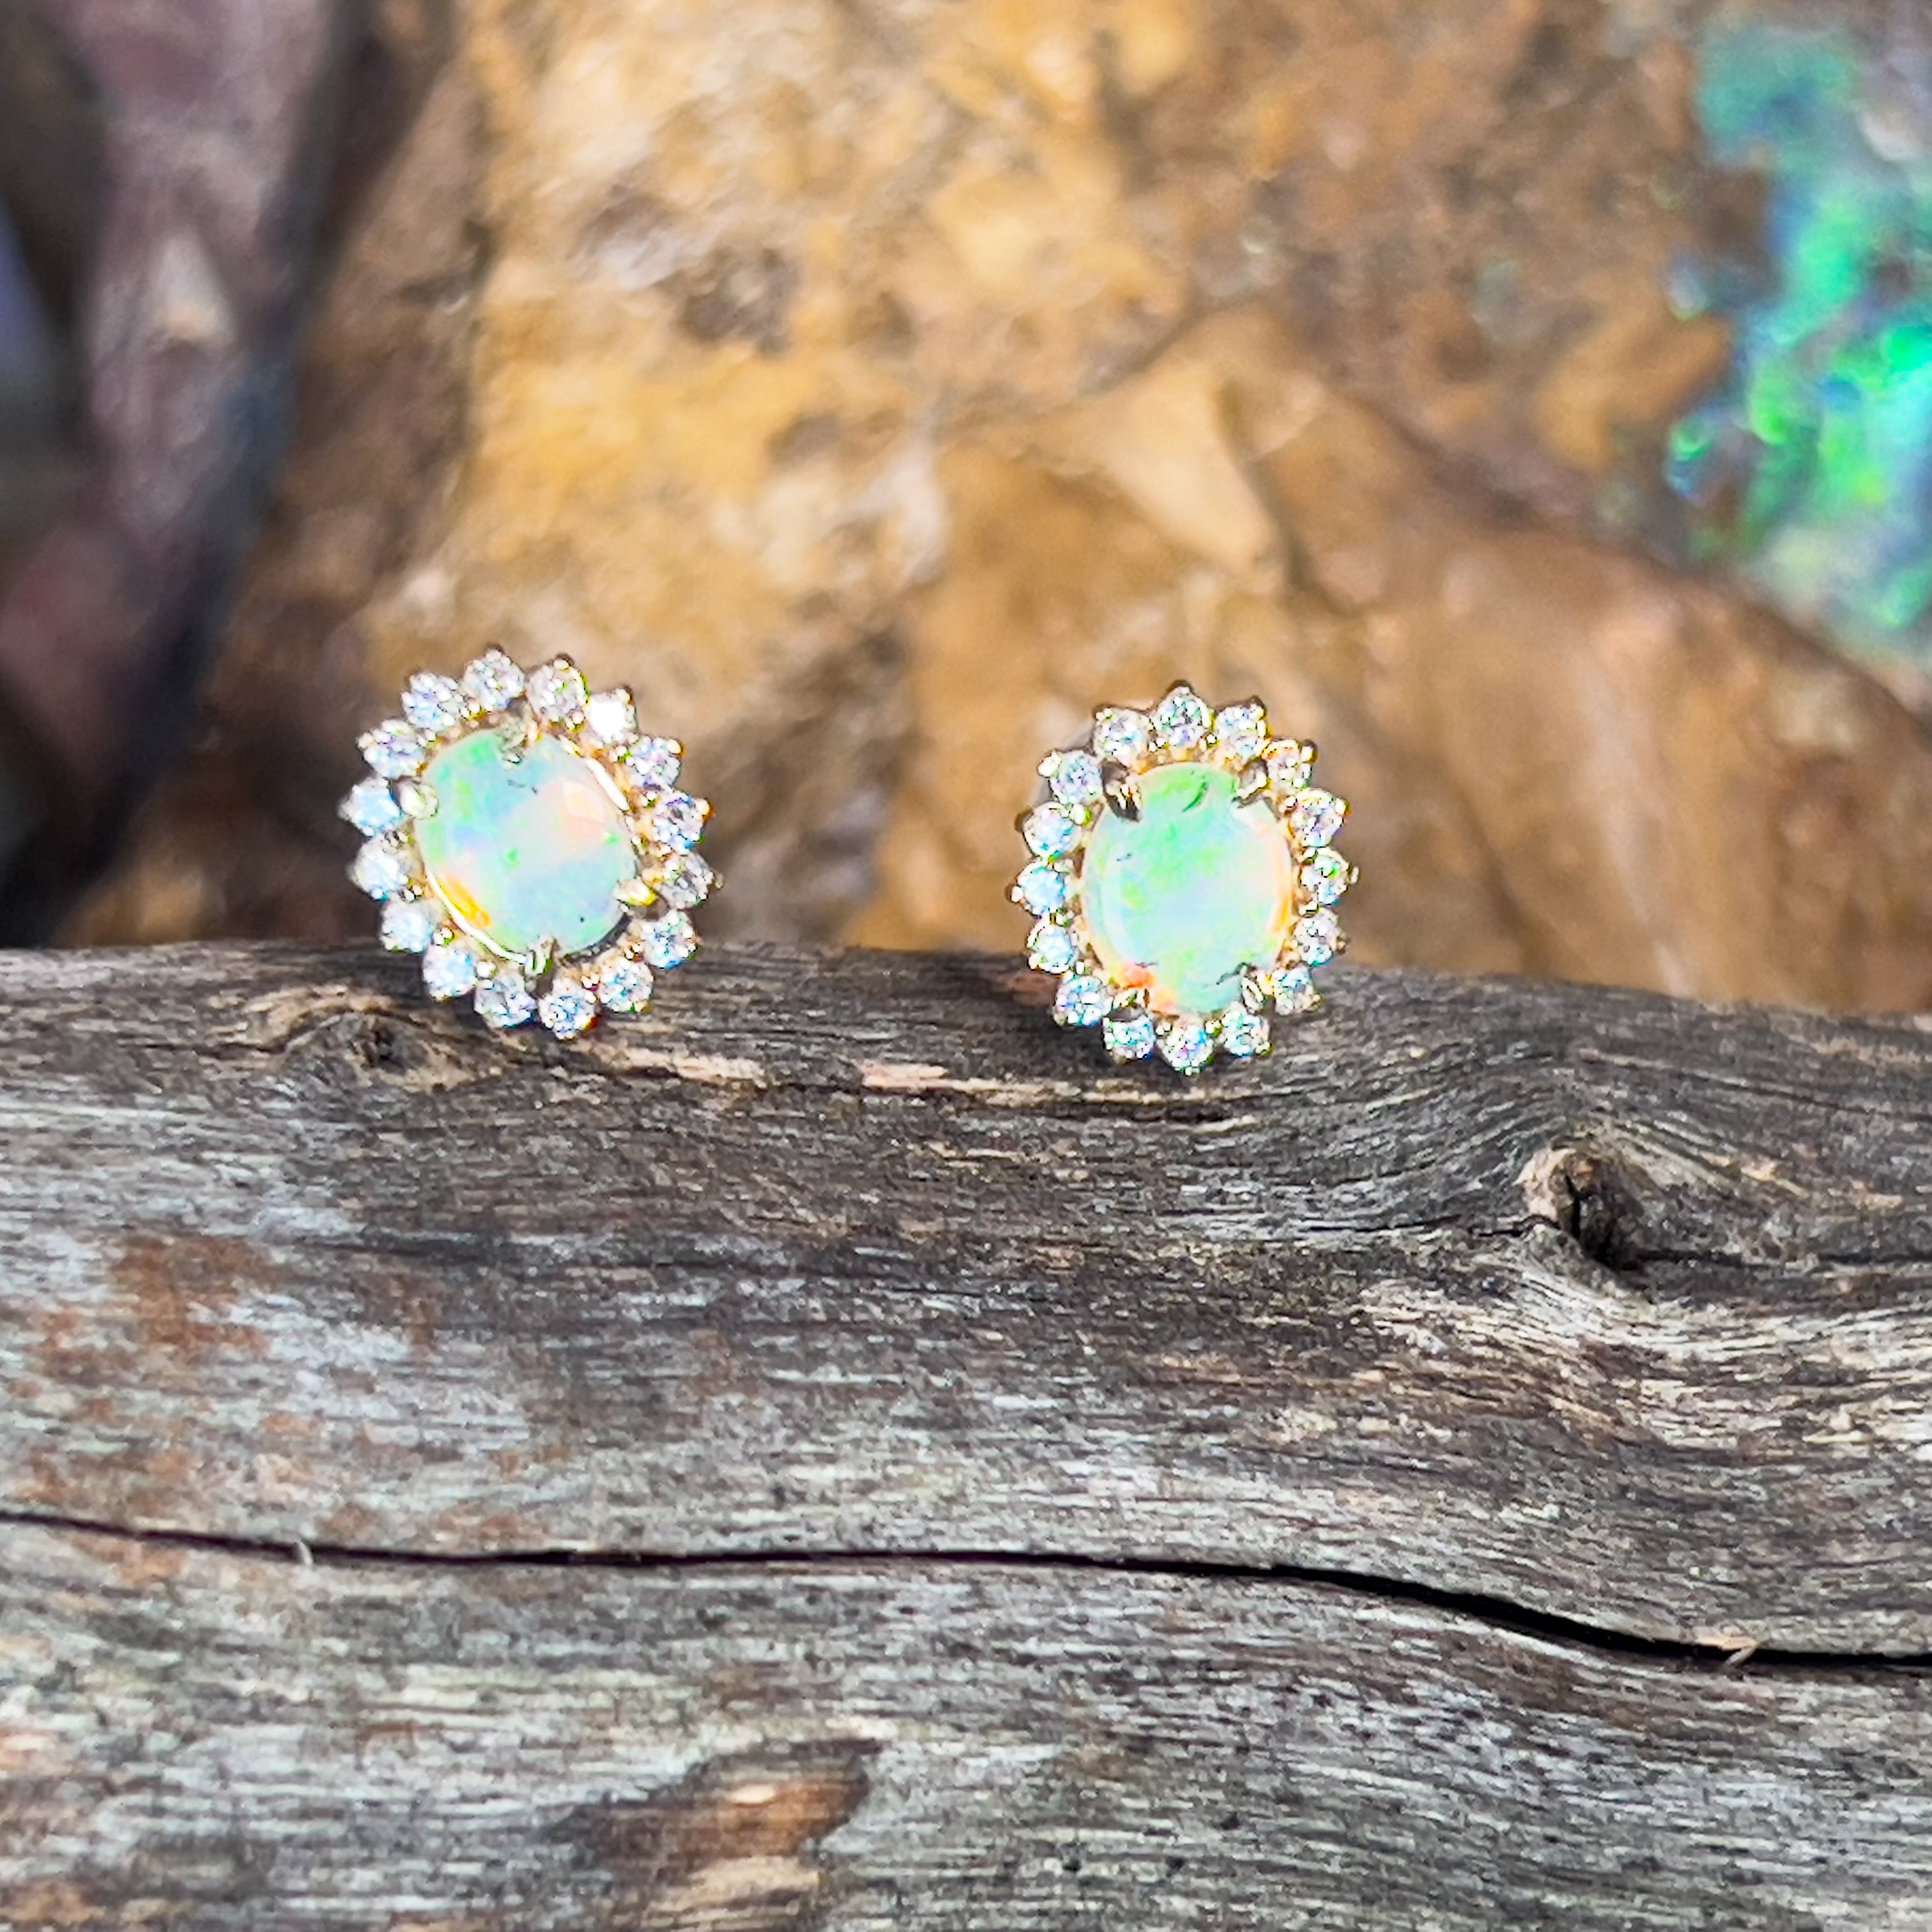 9kt Yellow Gold cluster earrings set with Light Opals and Diamonds - Masterpiece Jewellery Opal & Gems Sydney Australia | Online Shop